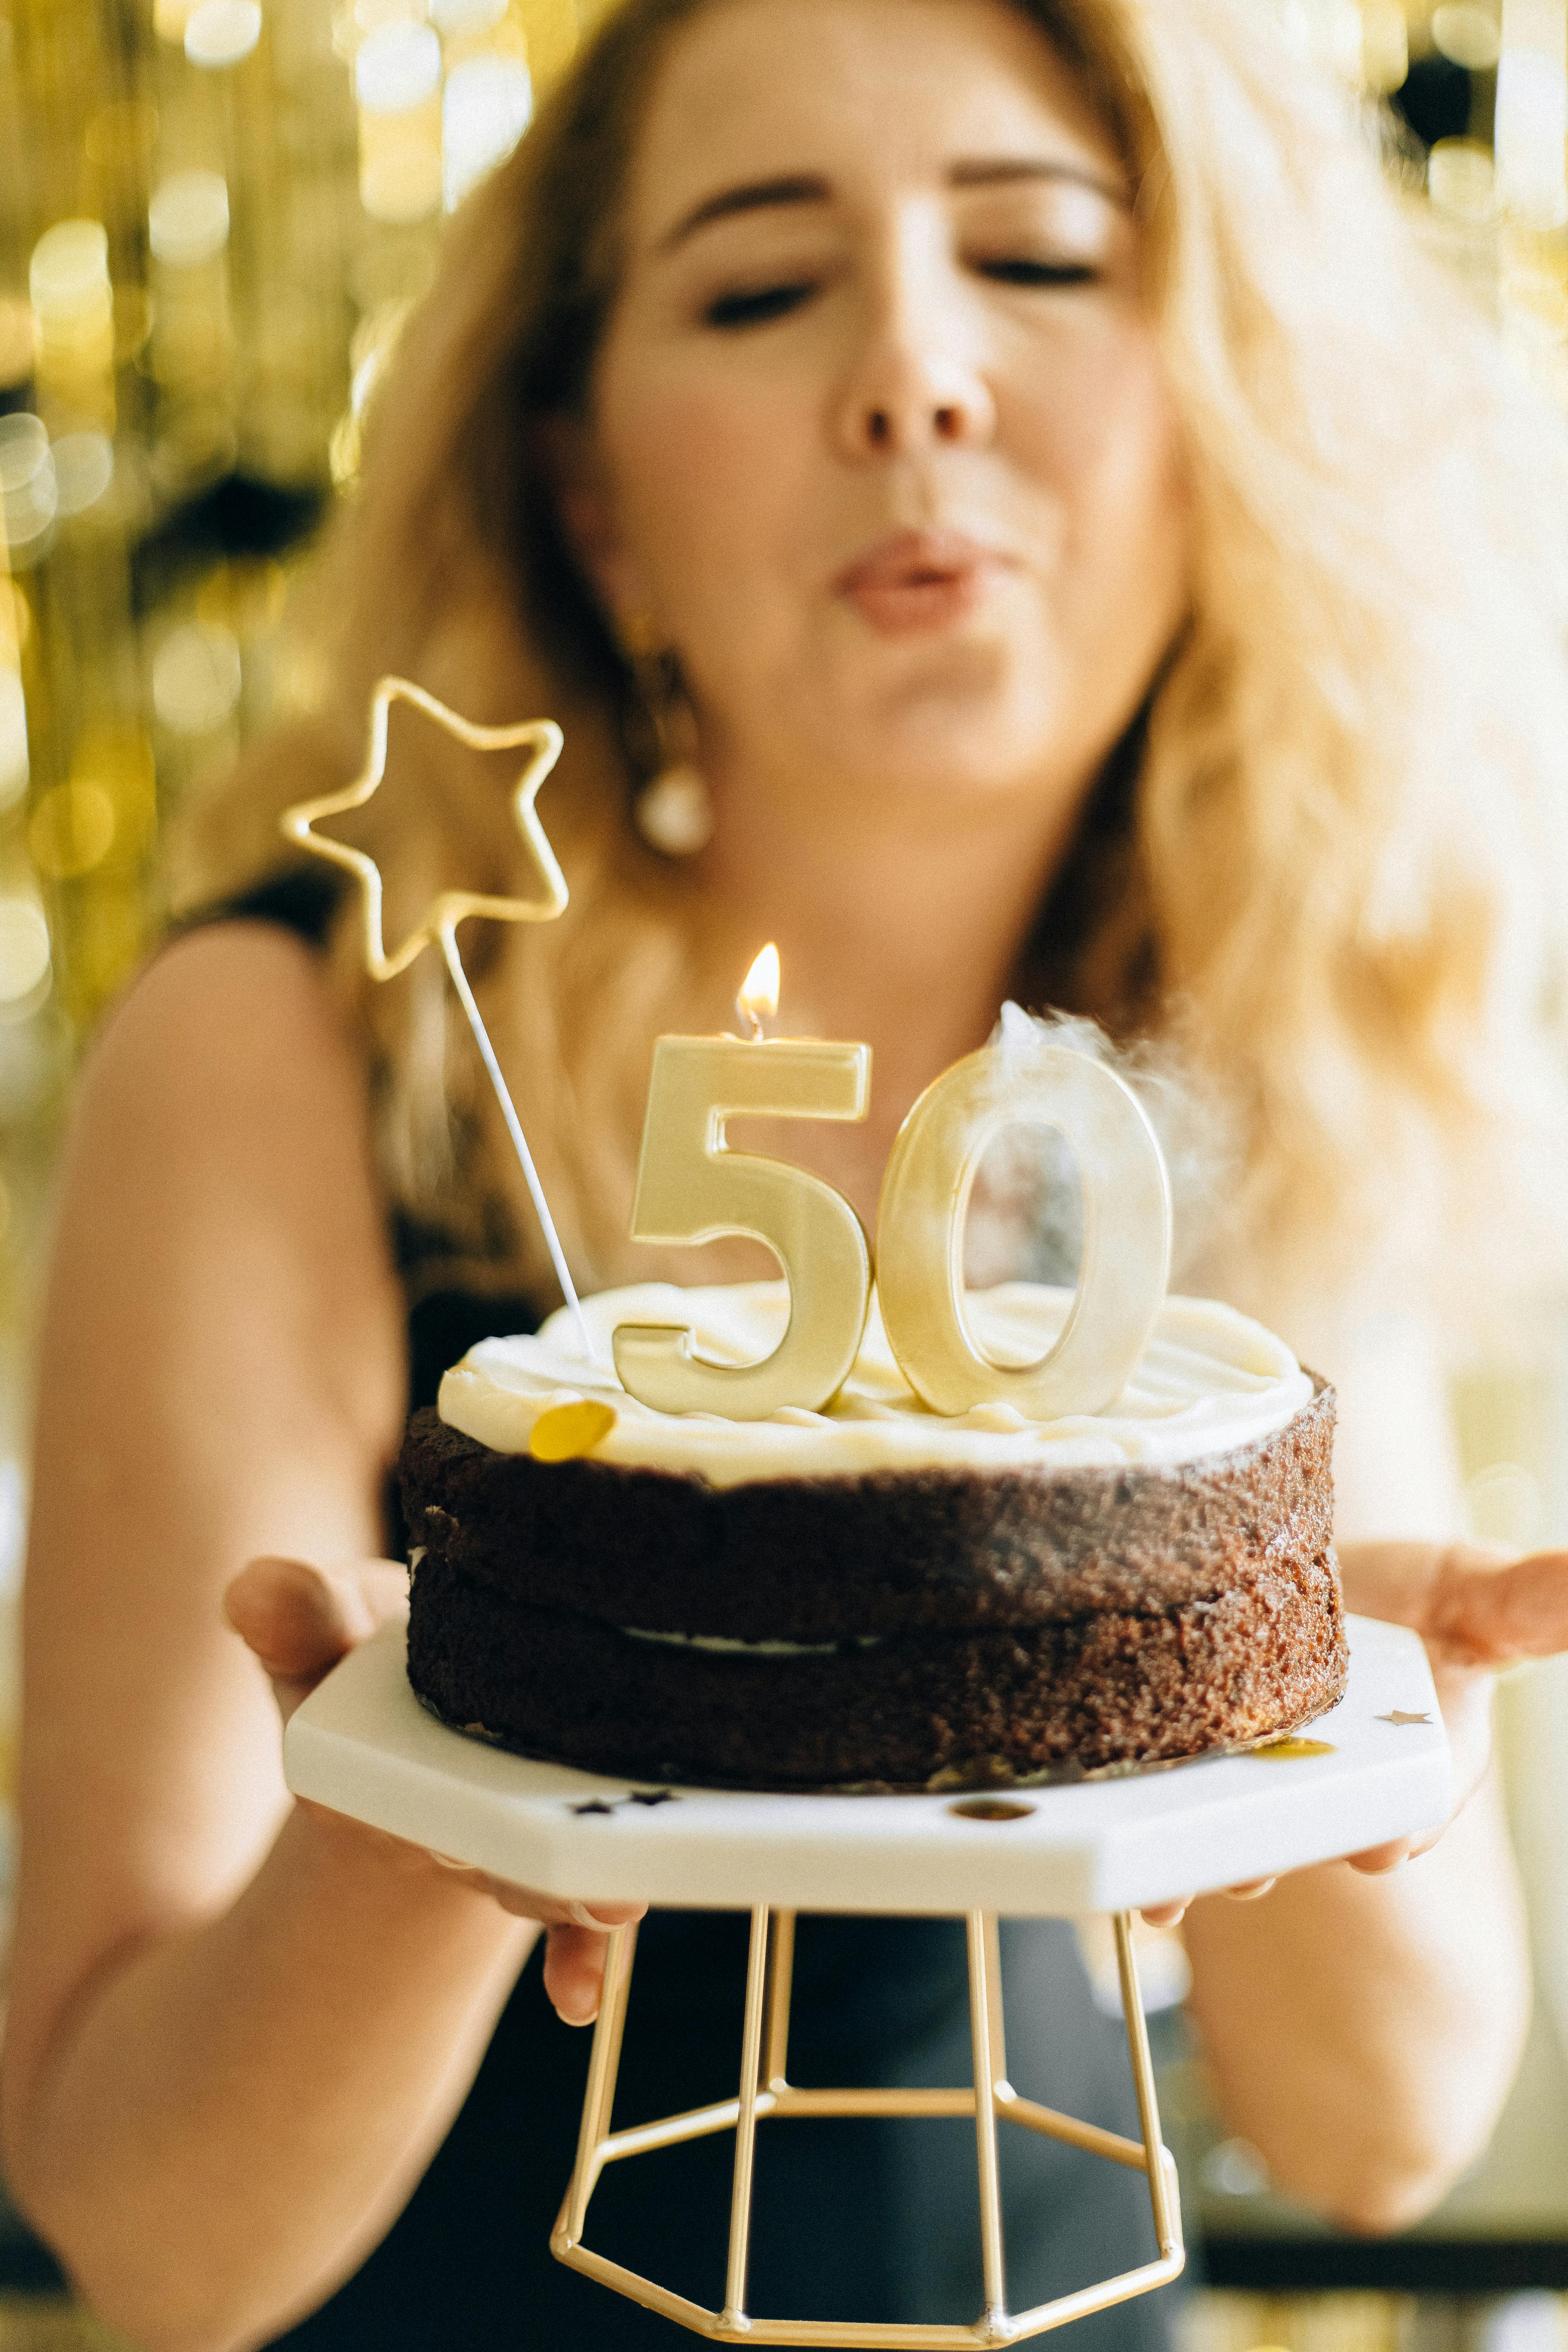 The "50" cake | Source: Pexels